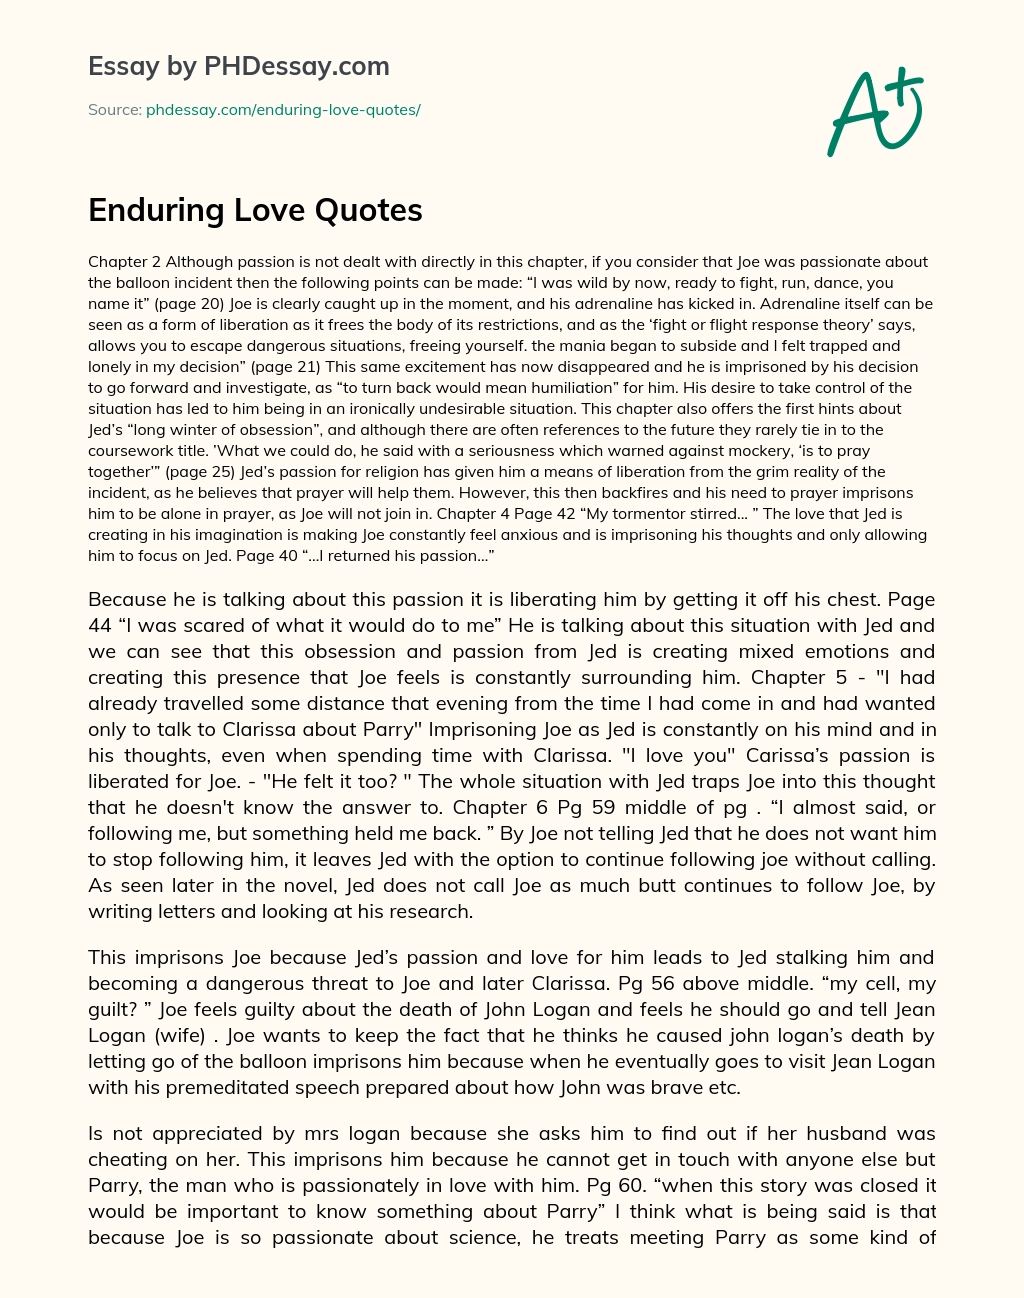 Enduring Love Quotes essay